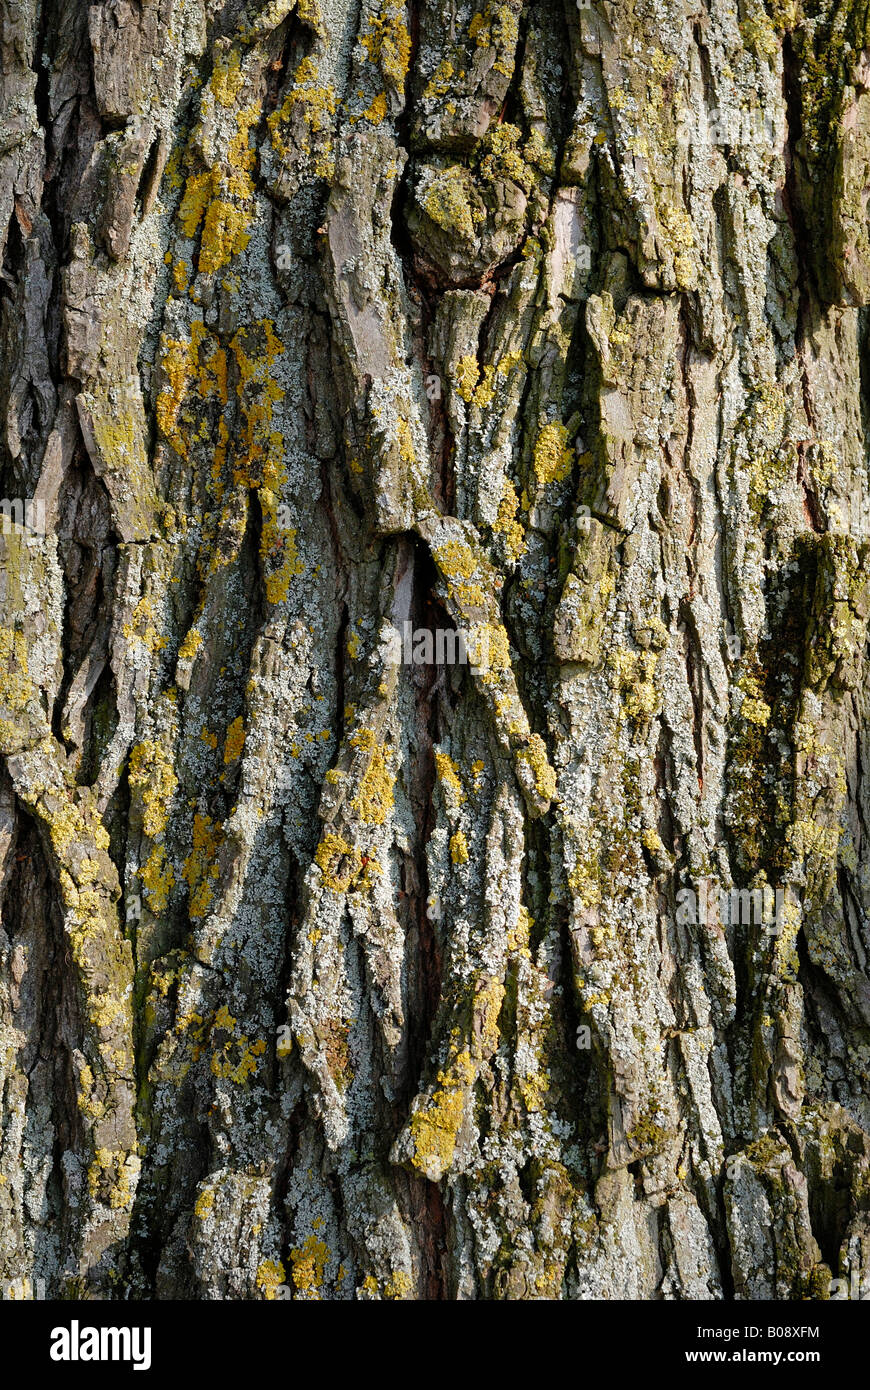 European White Elm or Russian Elm bark (Ulmus laevis) Stock Photo